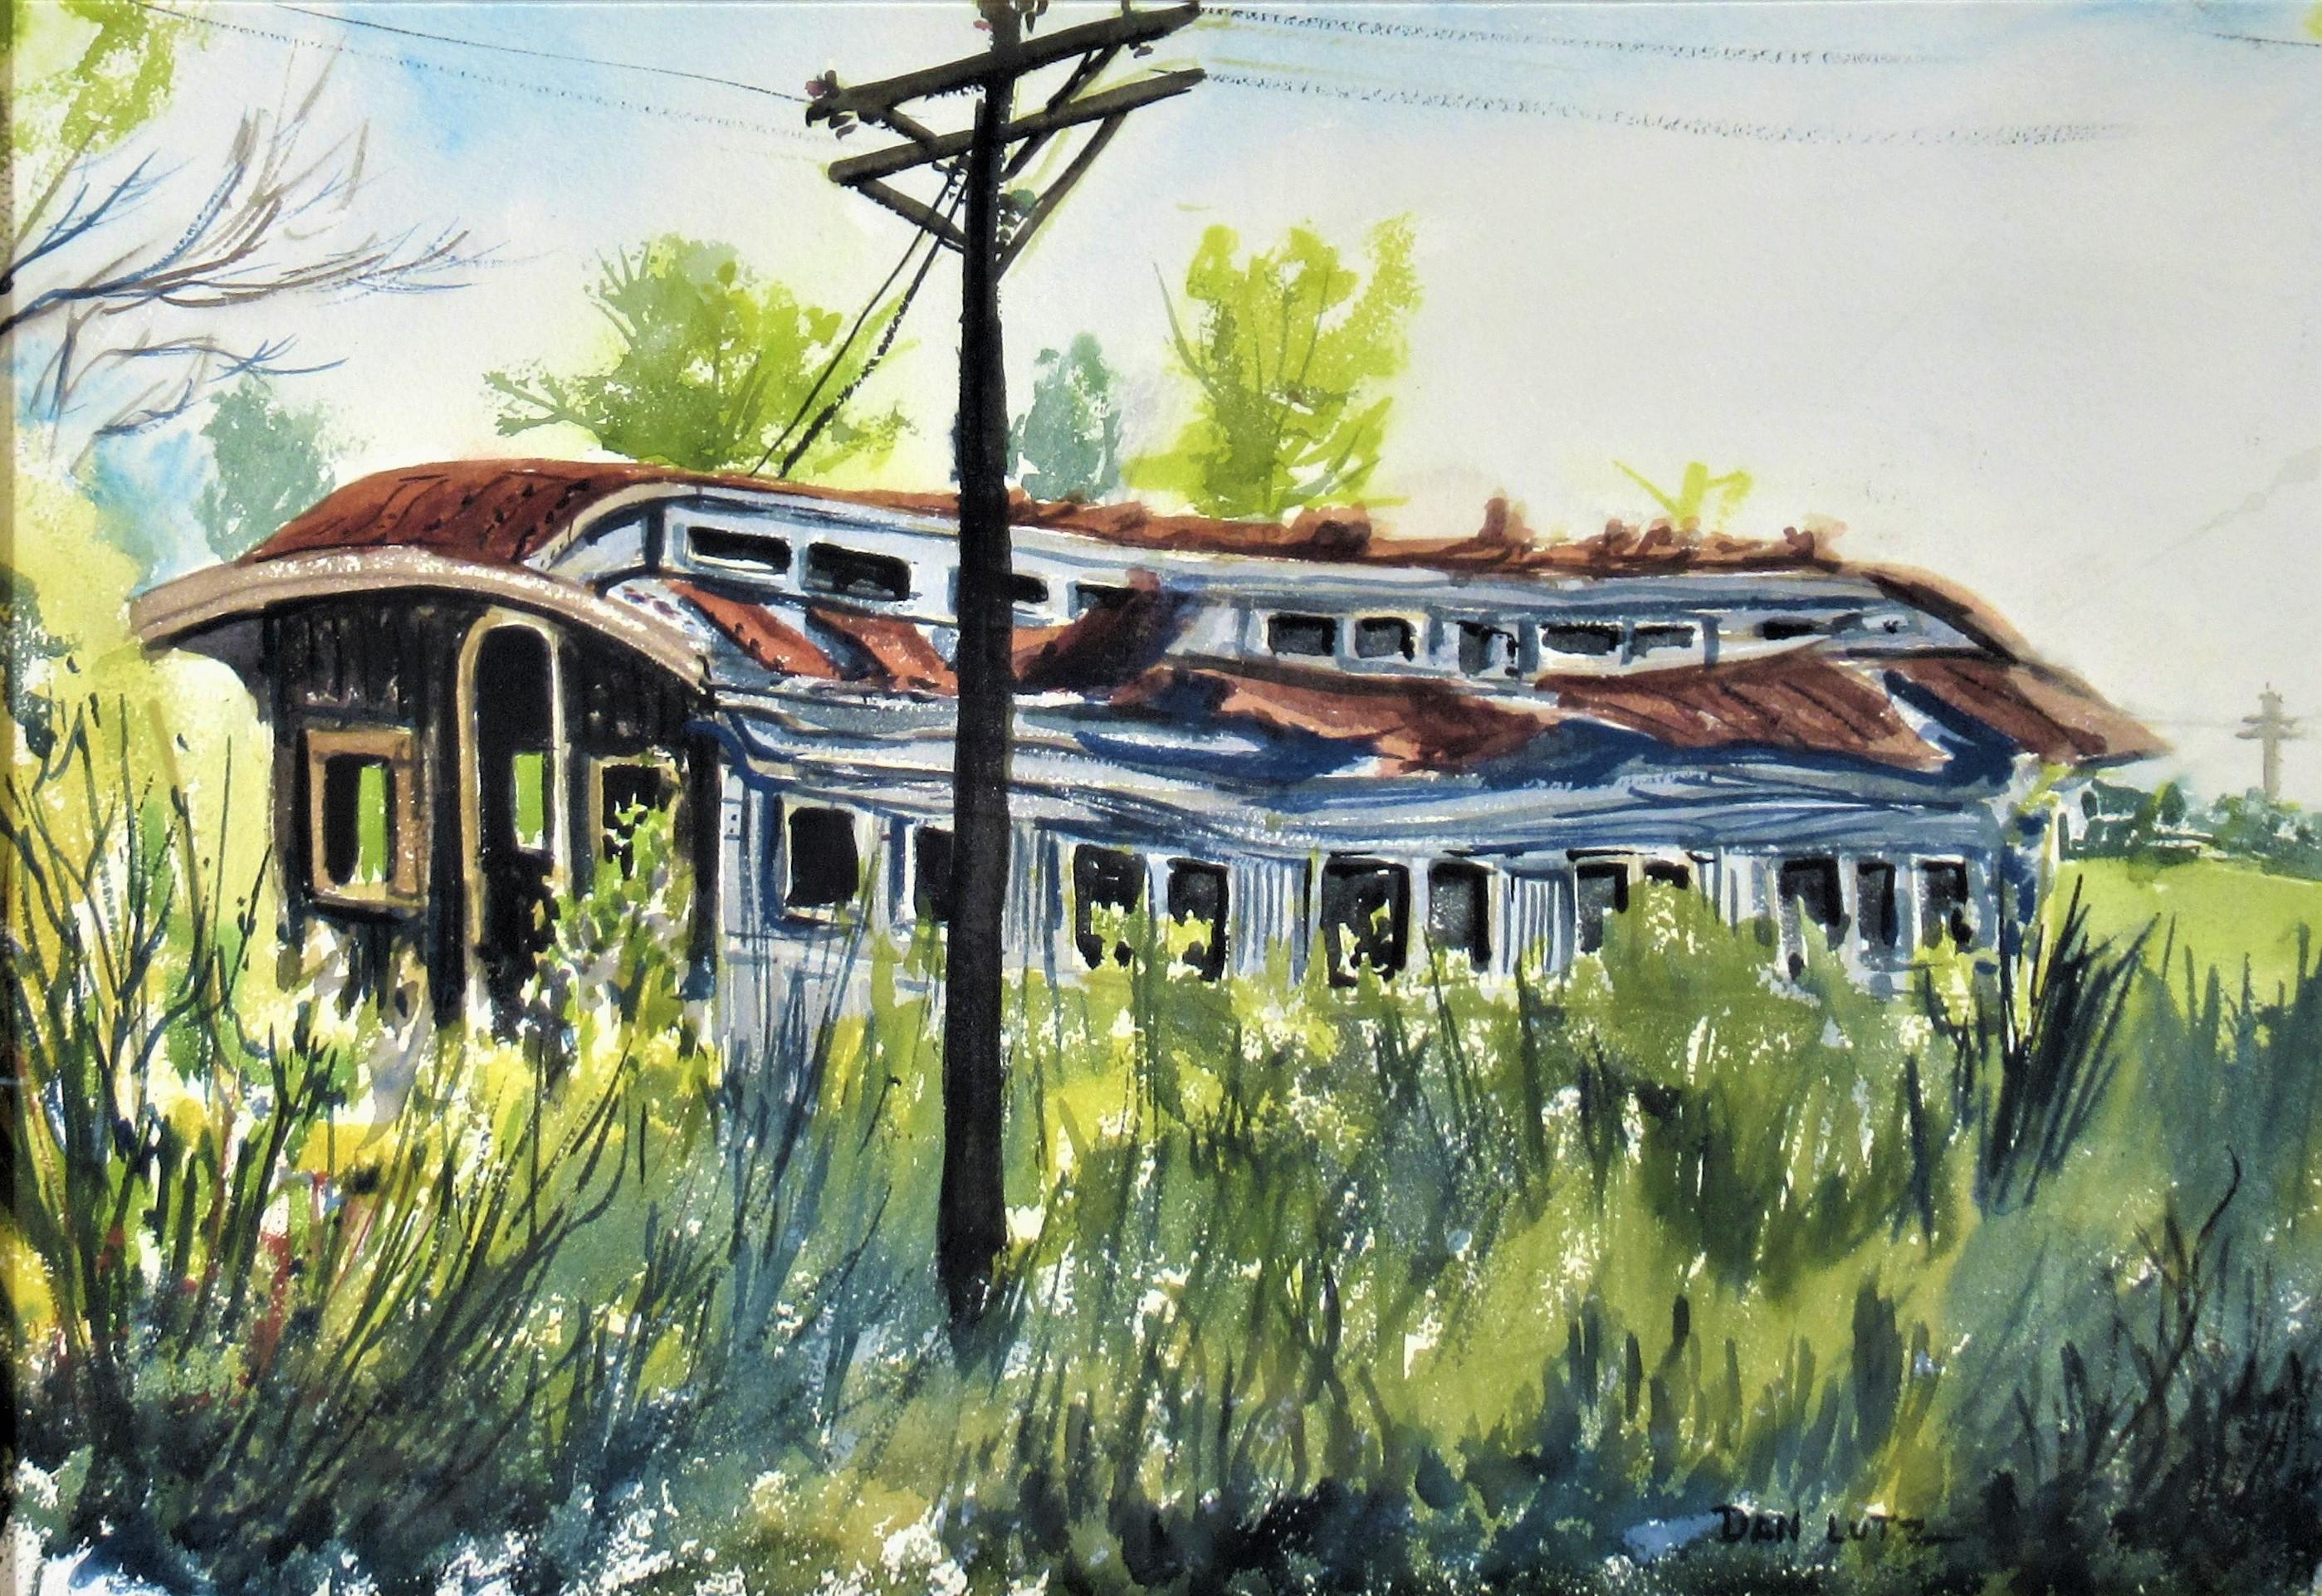 The Abandoned Train Car - Art by Dan (Daniel Stookey) Lutz